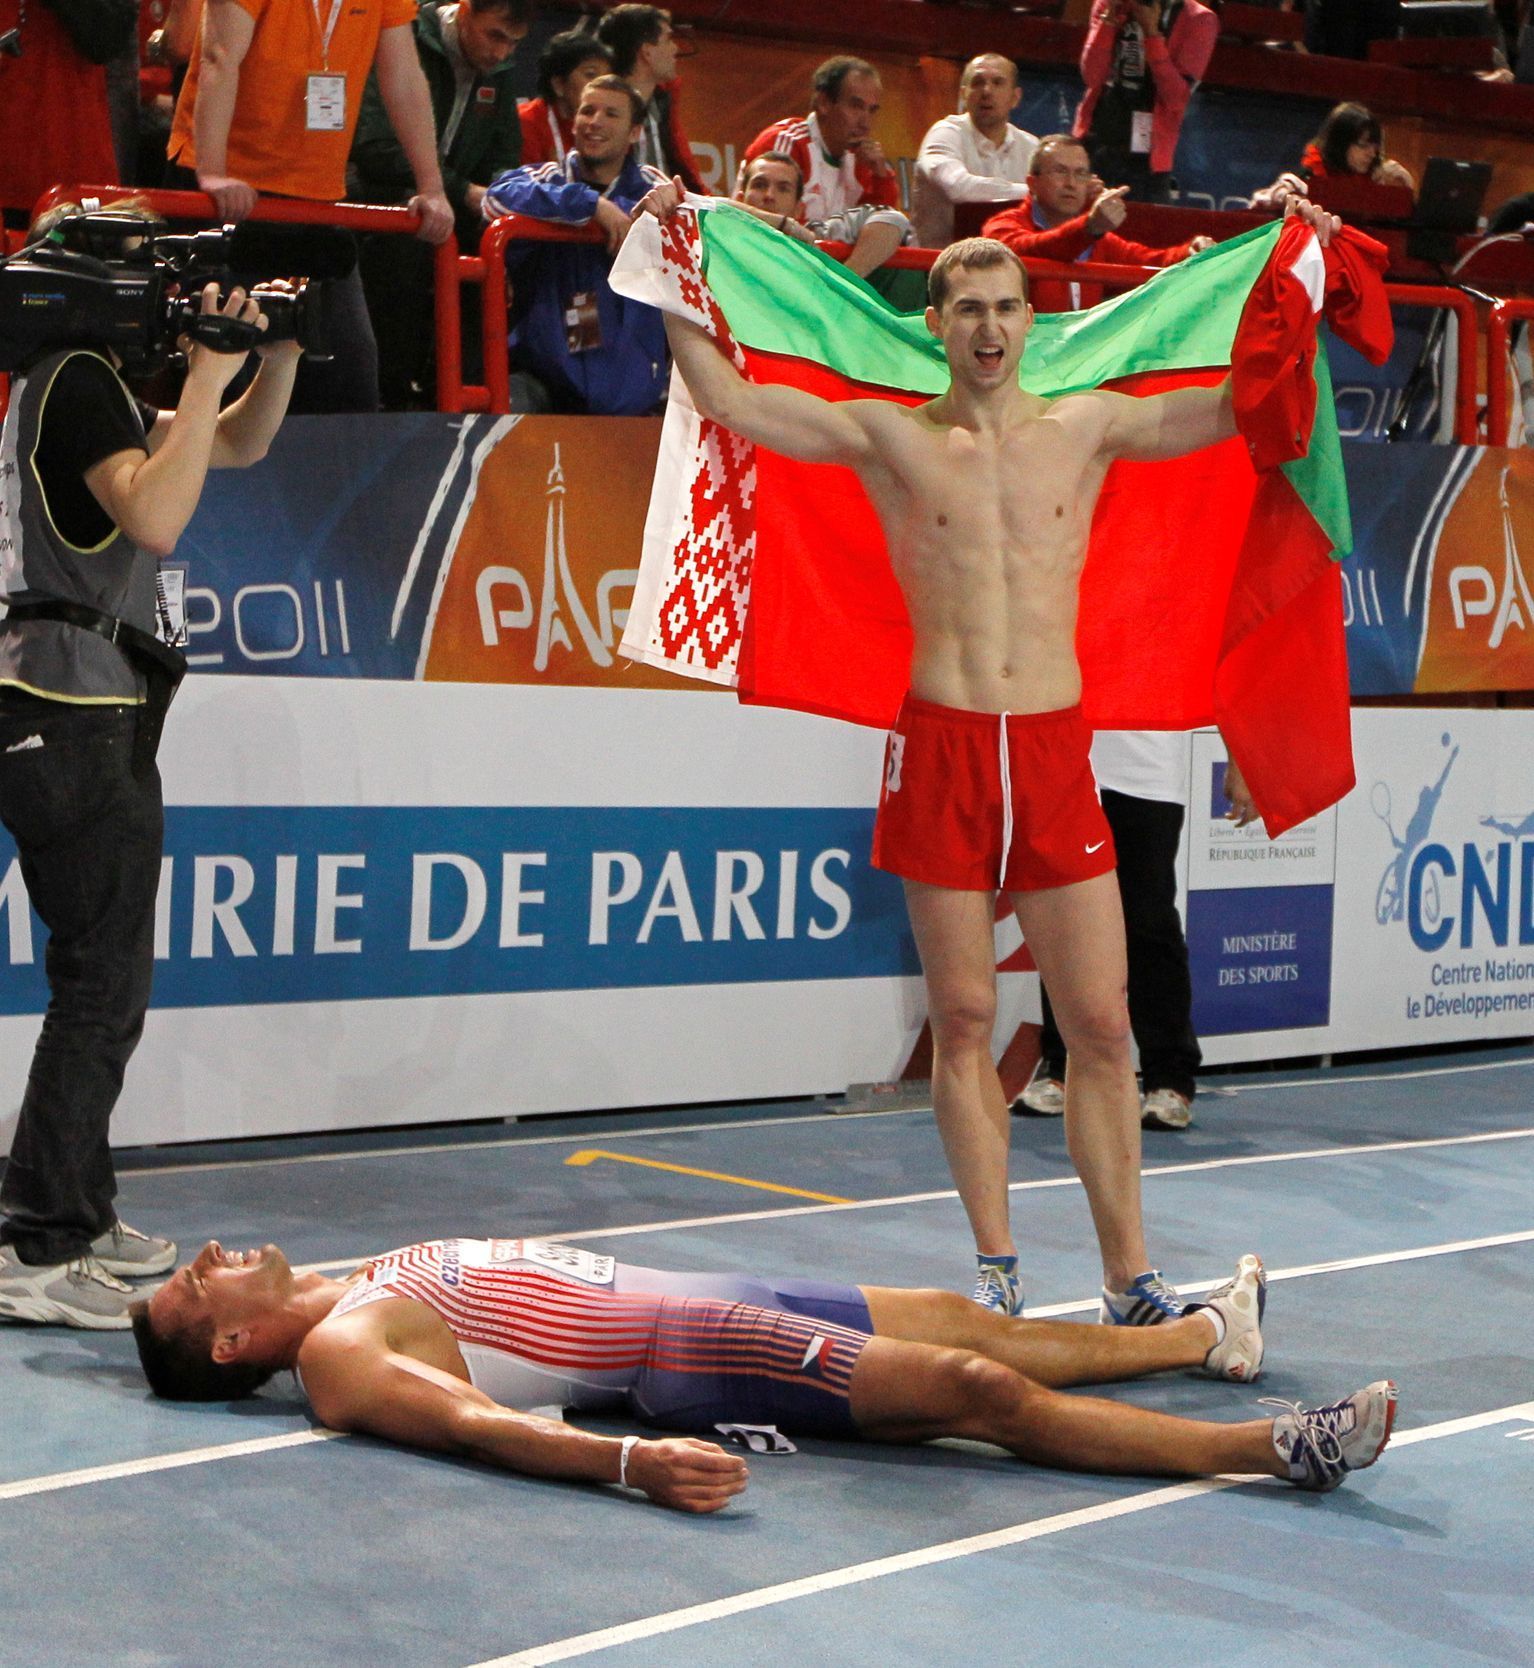 FILE PHOTO: Belarus's Krauchanka and Czech Republic's Sebrle react after the men's Heptathlon event at the European Athletics indoor championships in Paris